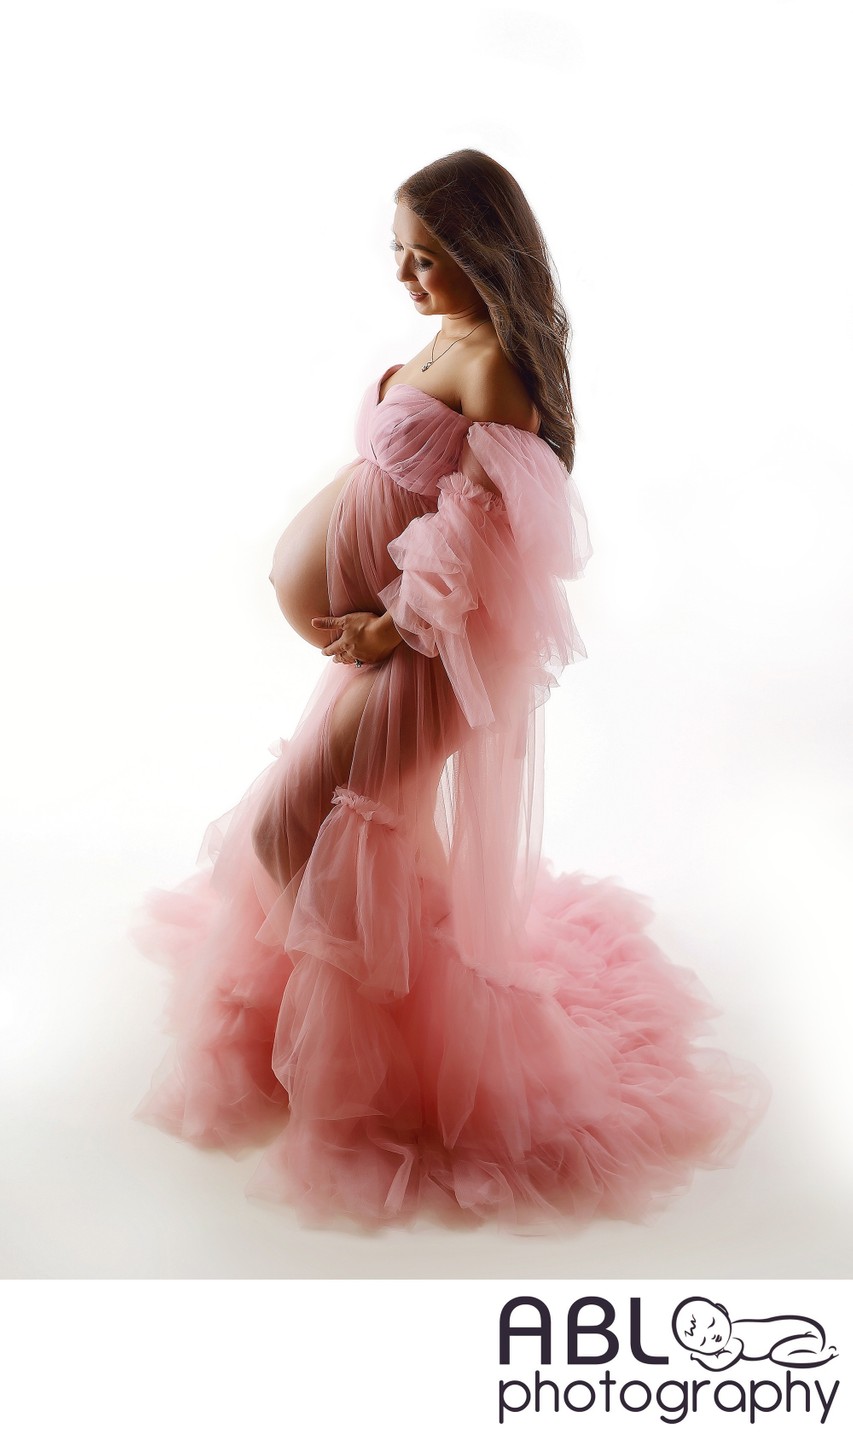 Studio Maternity photos with dramatic lighting